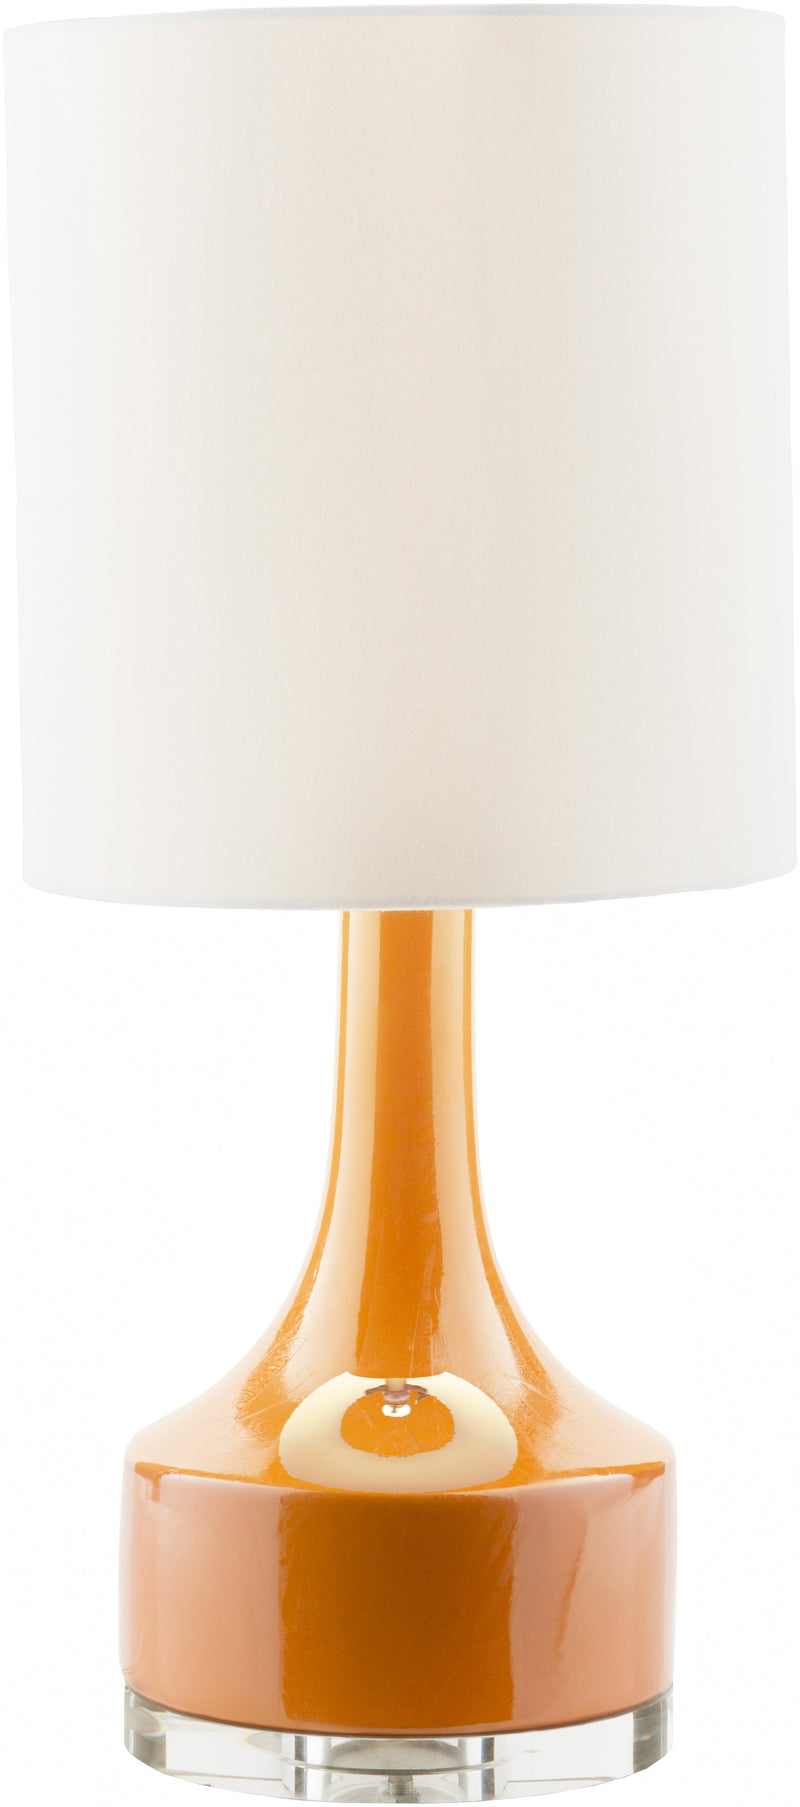 Farris Table Lamp in Orange design by Surya